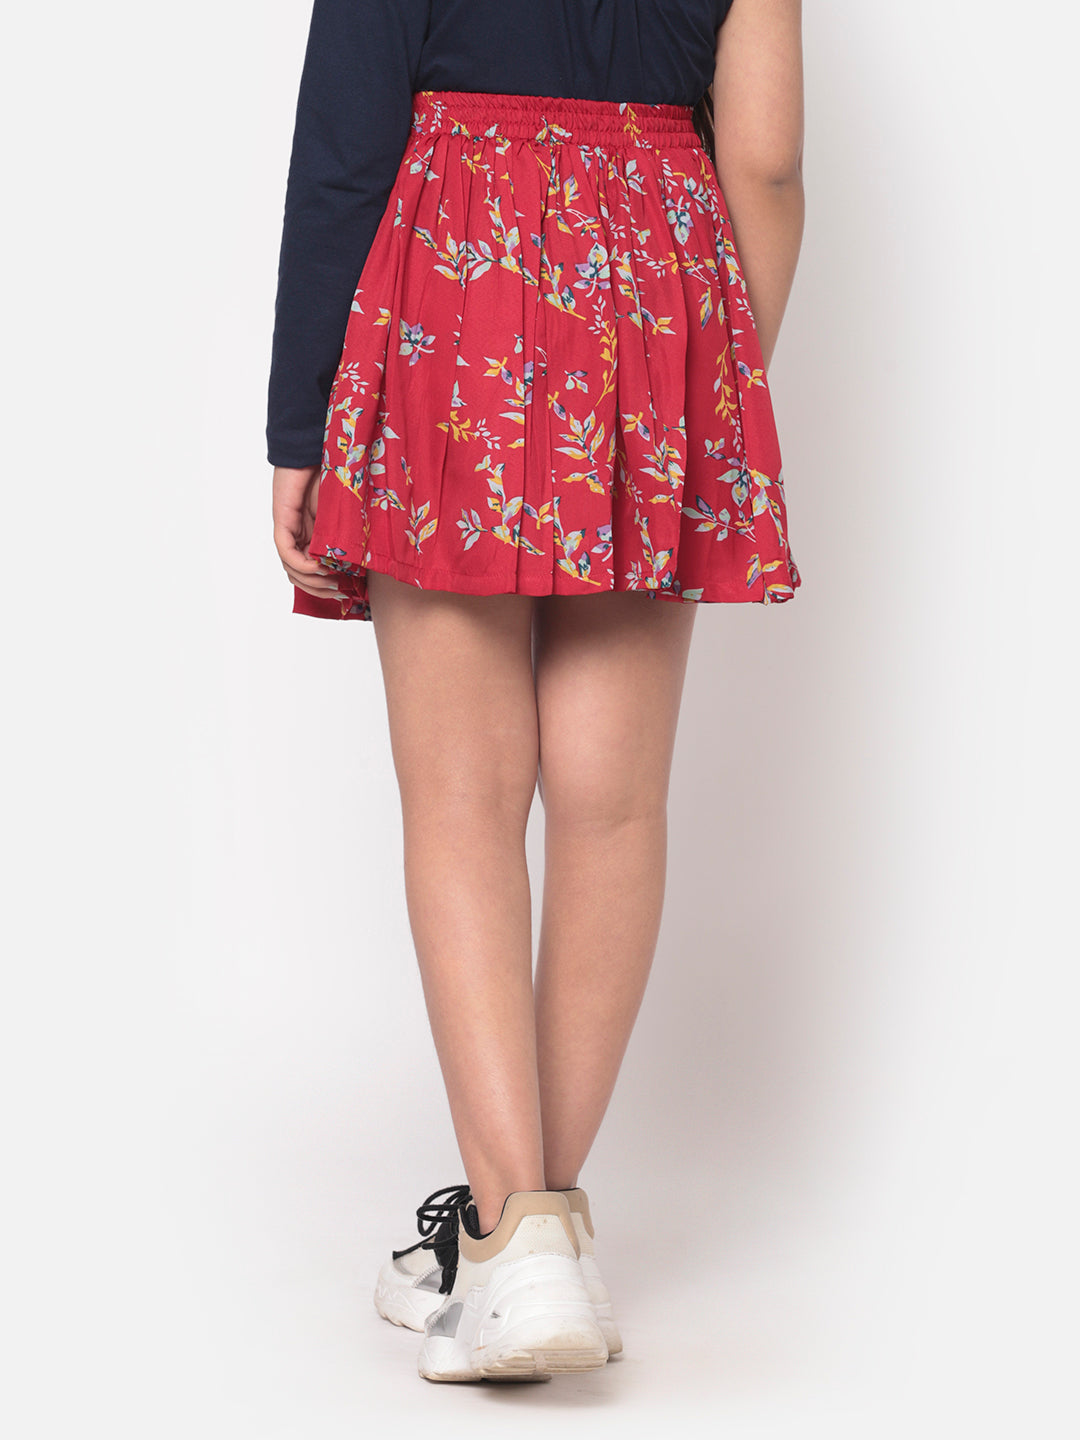 MINOS Red Floral Skirt